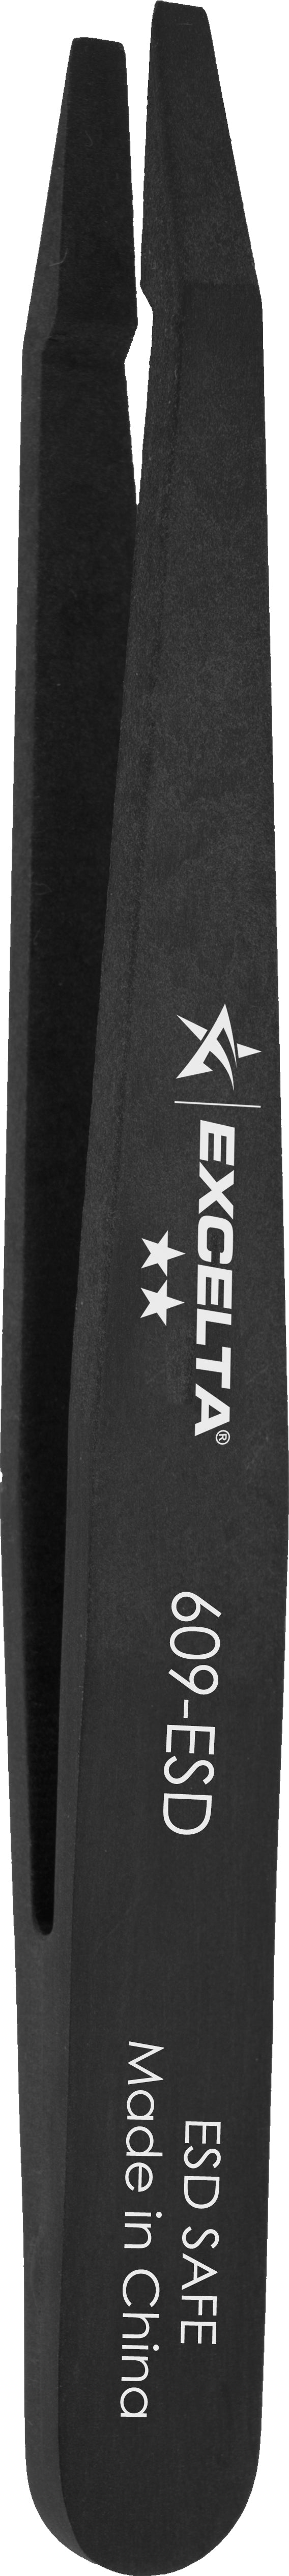 Excelta 609-ESD Tweezers - Plastic - Straight .005" X .12" Tip - Acetal - Conductive, Pack of 20